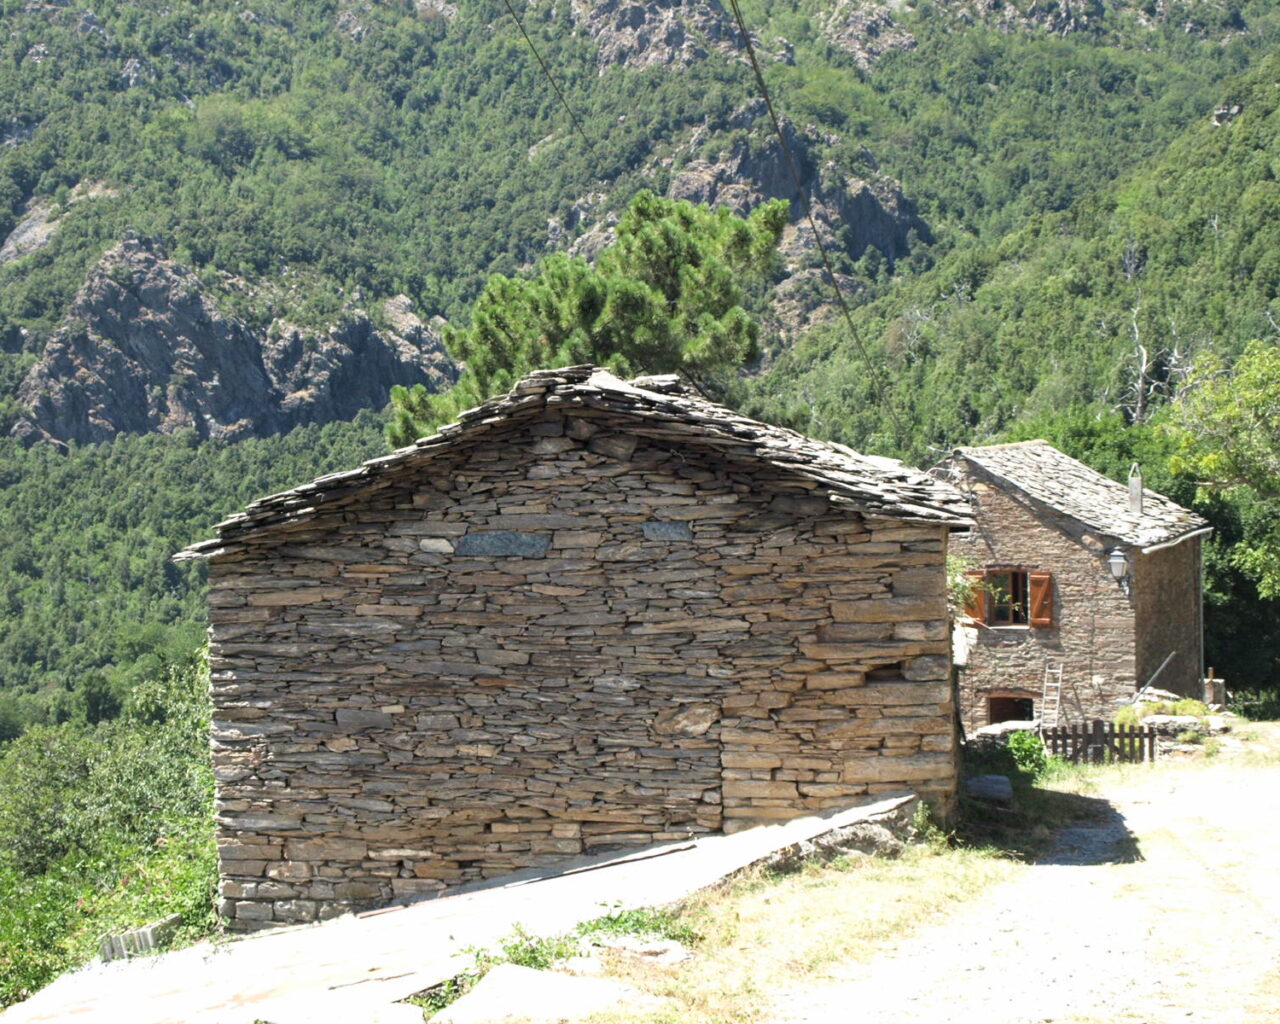 40 Le hameau de Campodonico